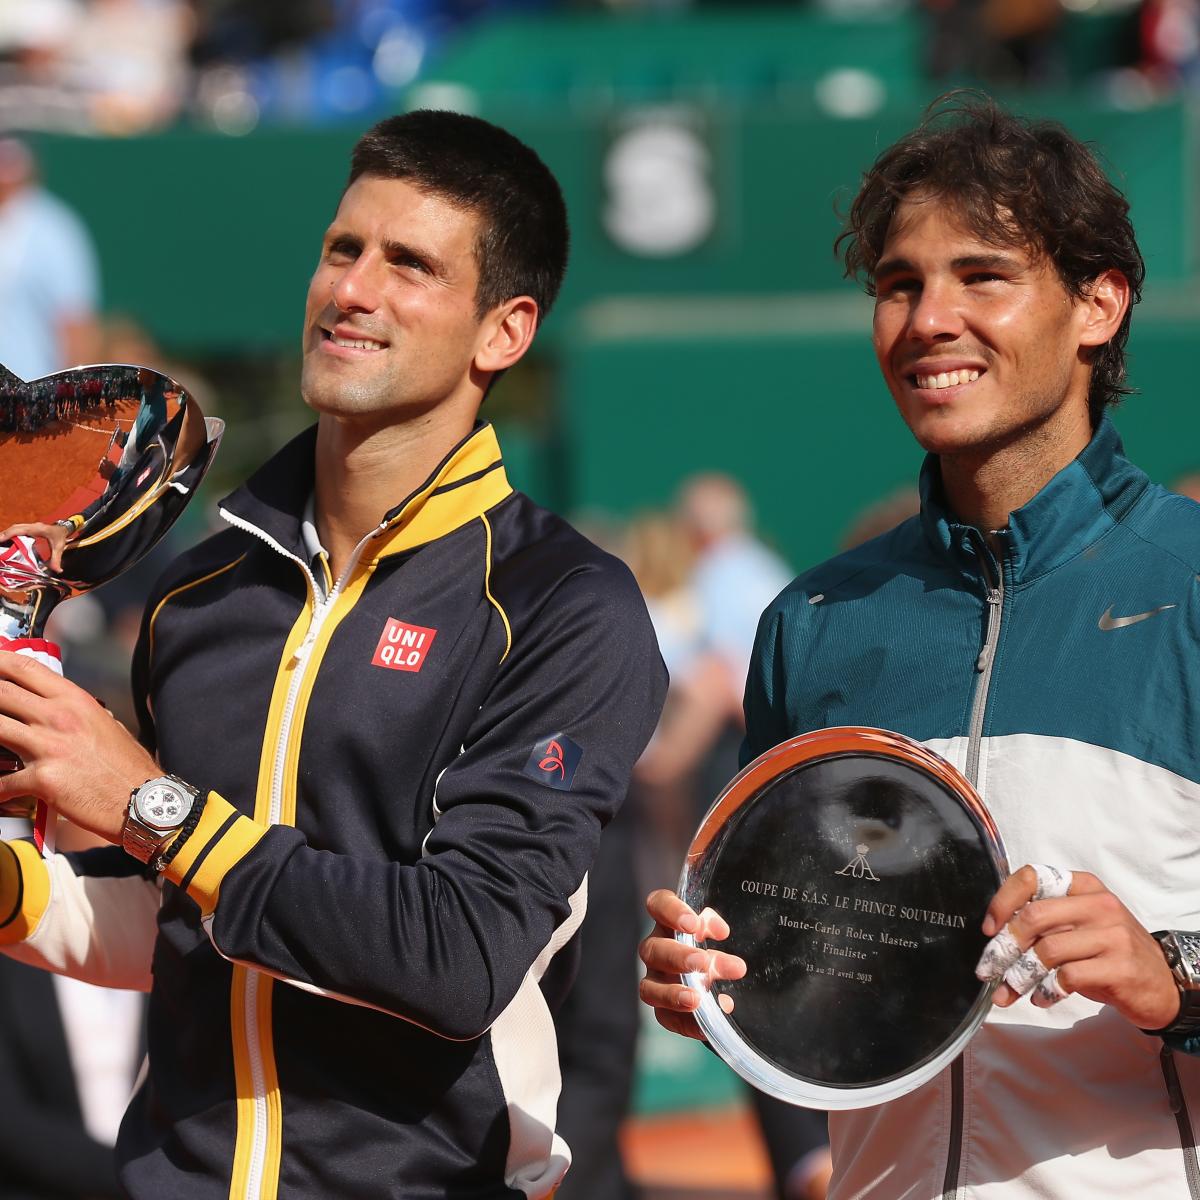 Roland Garros Glory Awaits Rafael Nadal or Novak Djokovic at French